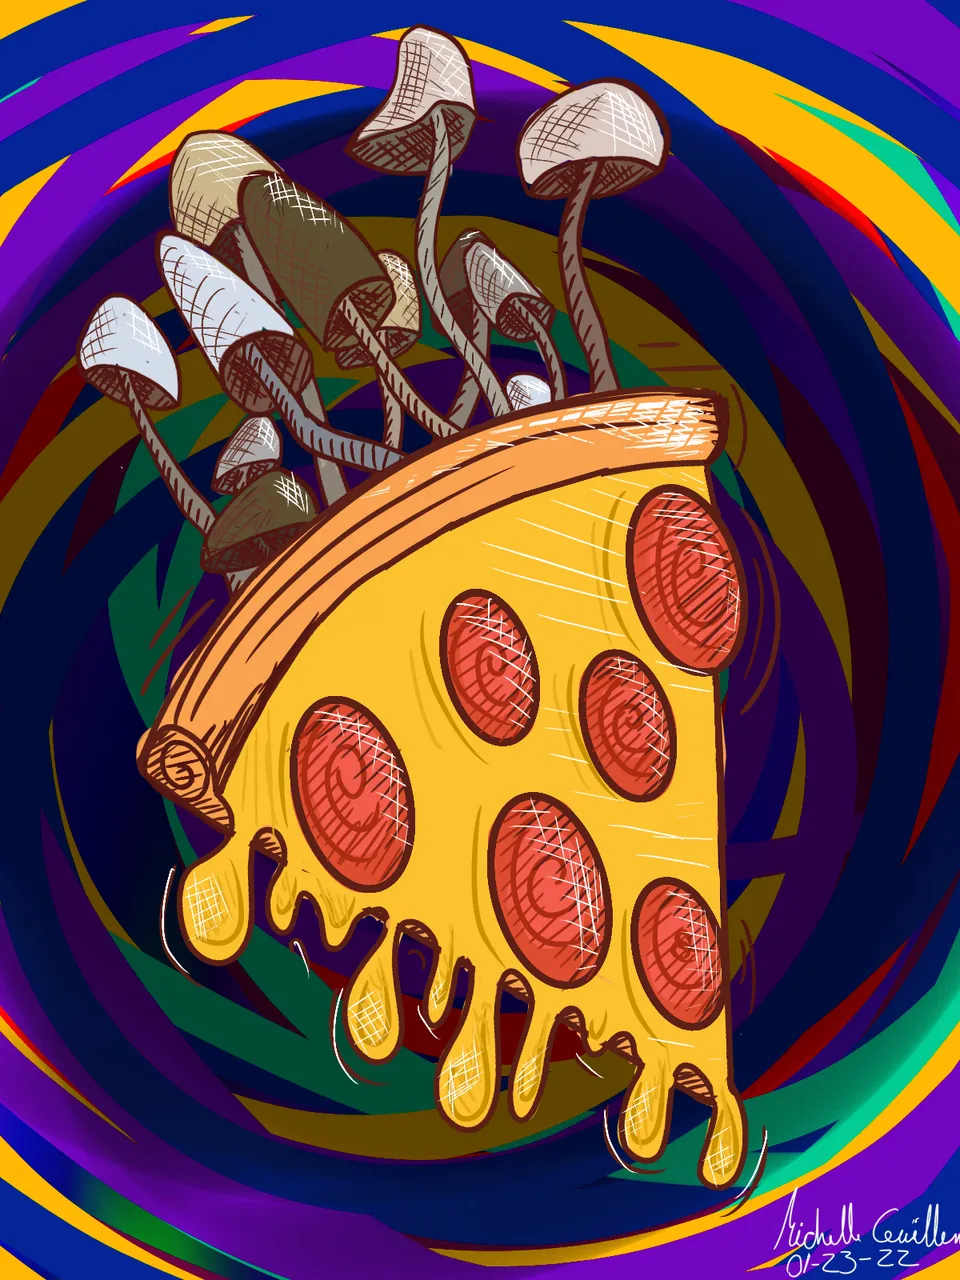 mushroom pizza05.png